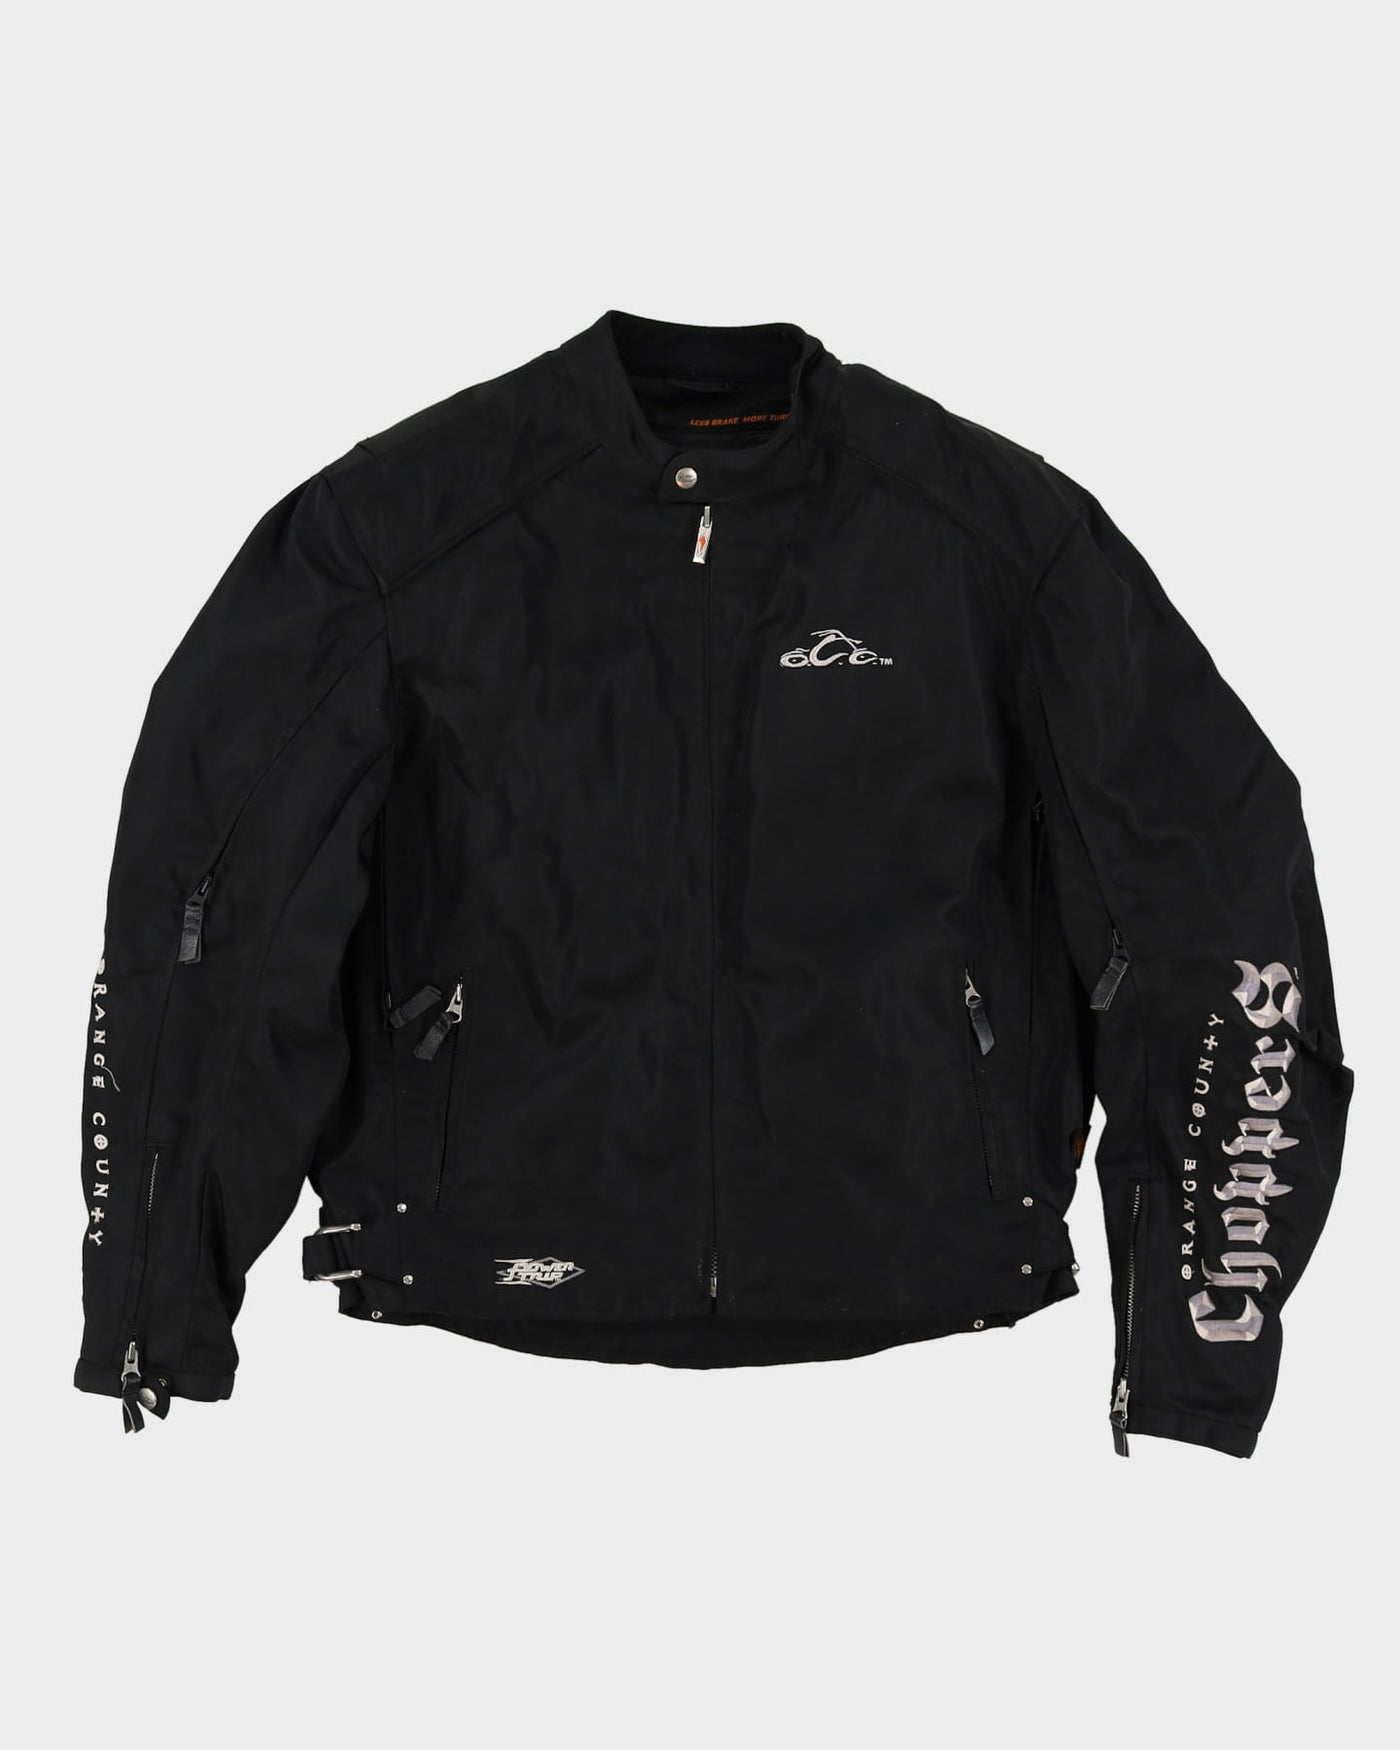 Vintage 90s Power Strip Black Biker Jacket - M